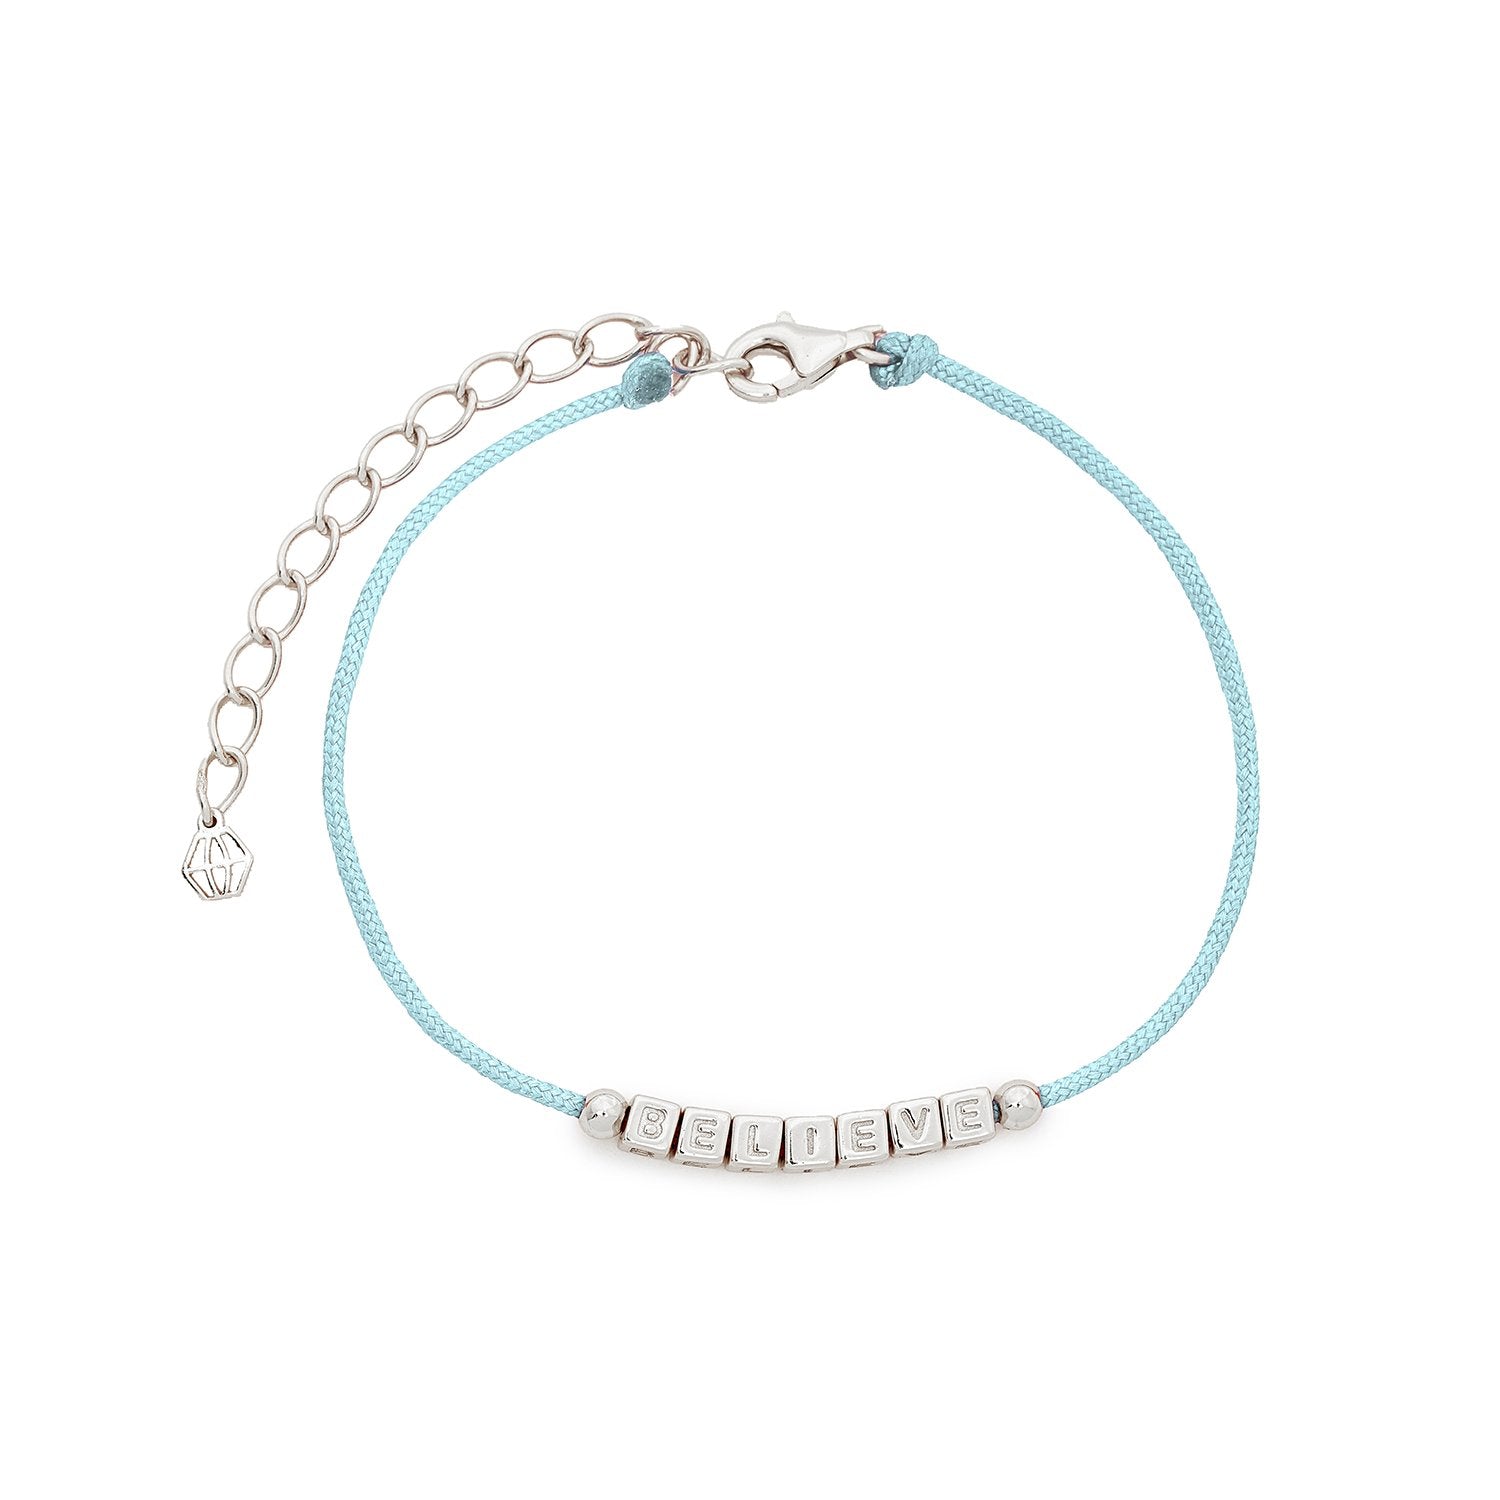 Little Words Project Refined Collection - Believe Light Blue Cord Bracelet